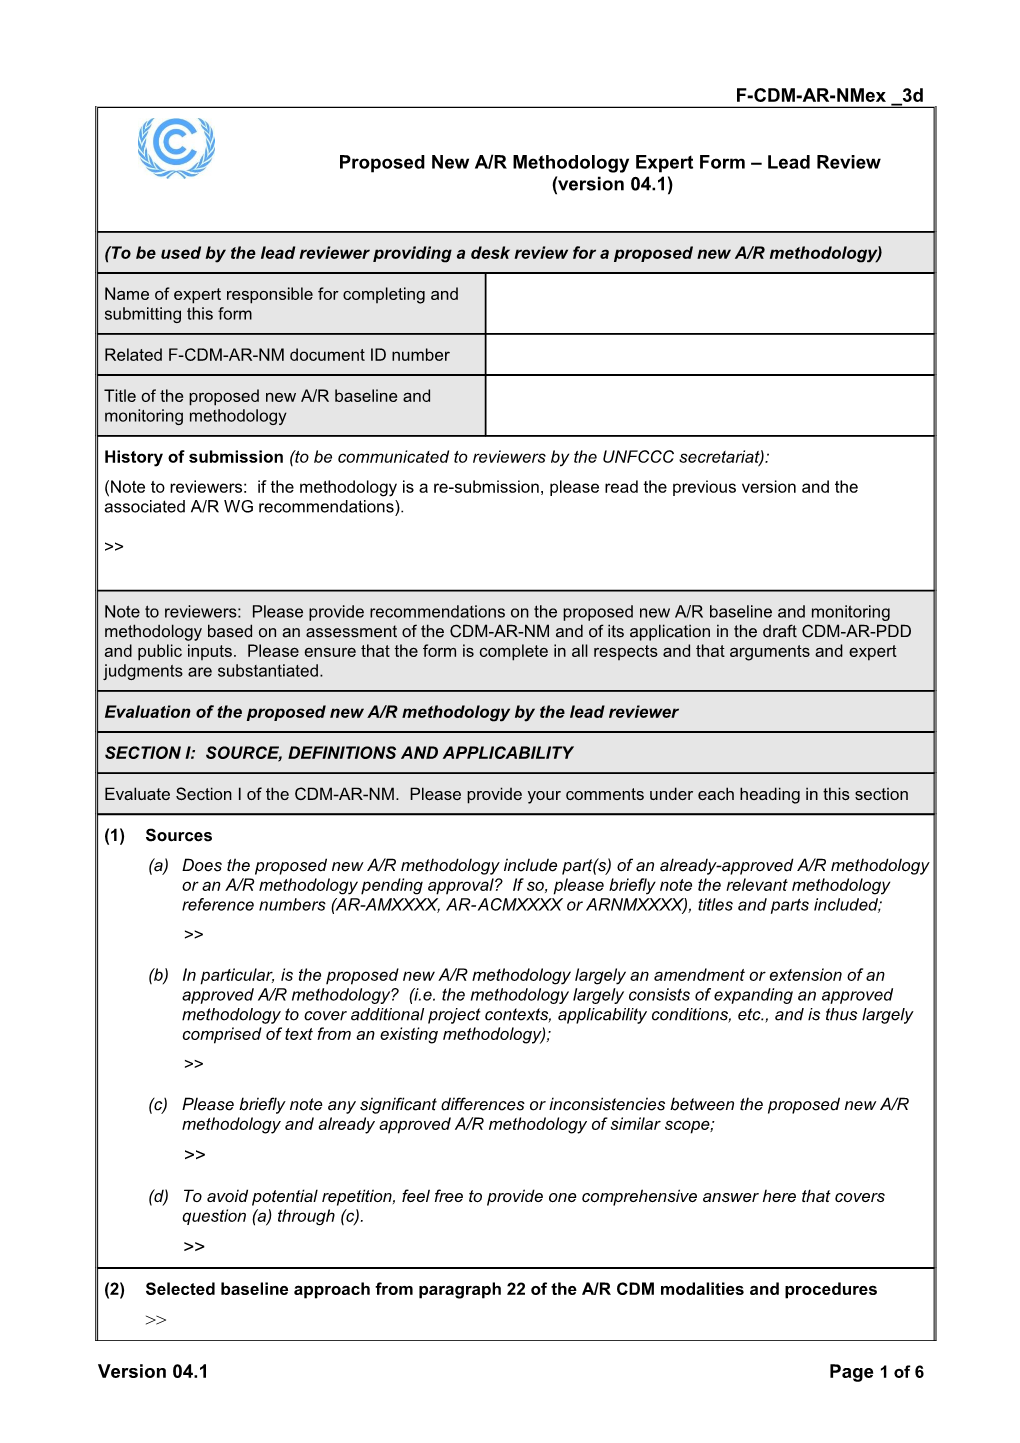 CDM: Proposed New A/R Methodology Expert Form - Lead Review (F-CDM-AR-Nmex 3D). (Version 04.1)